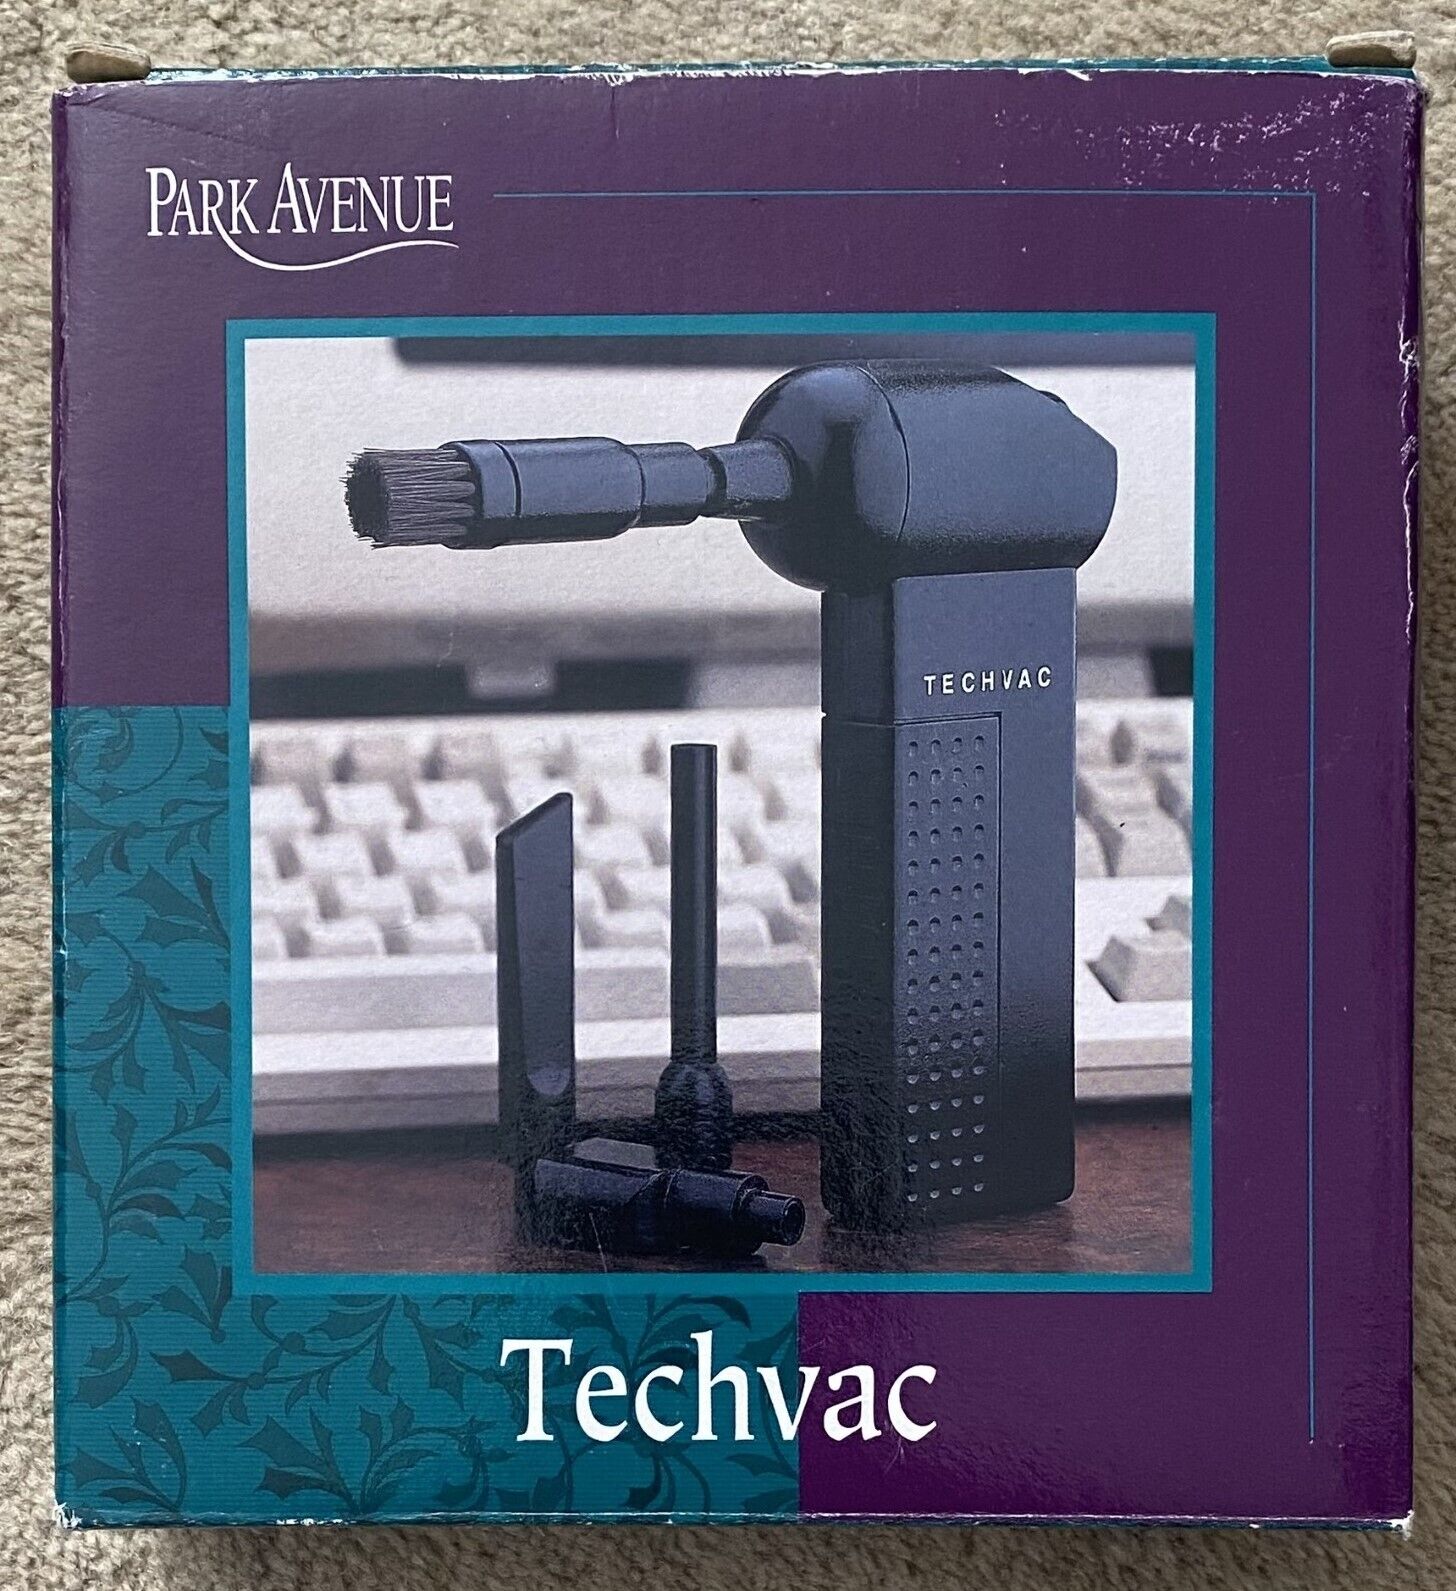 Park Avenue Techvac Keyboard Mini hand held vacuum PA0914BK Used w/ Box Tested